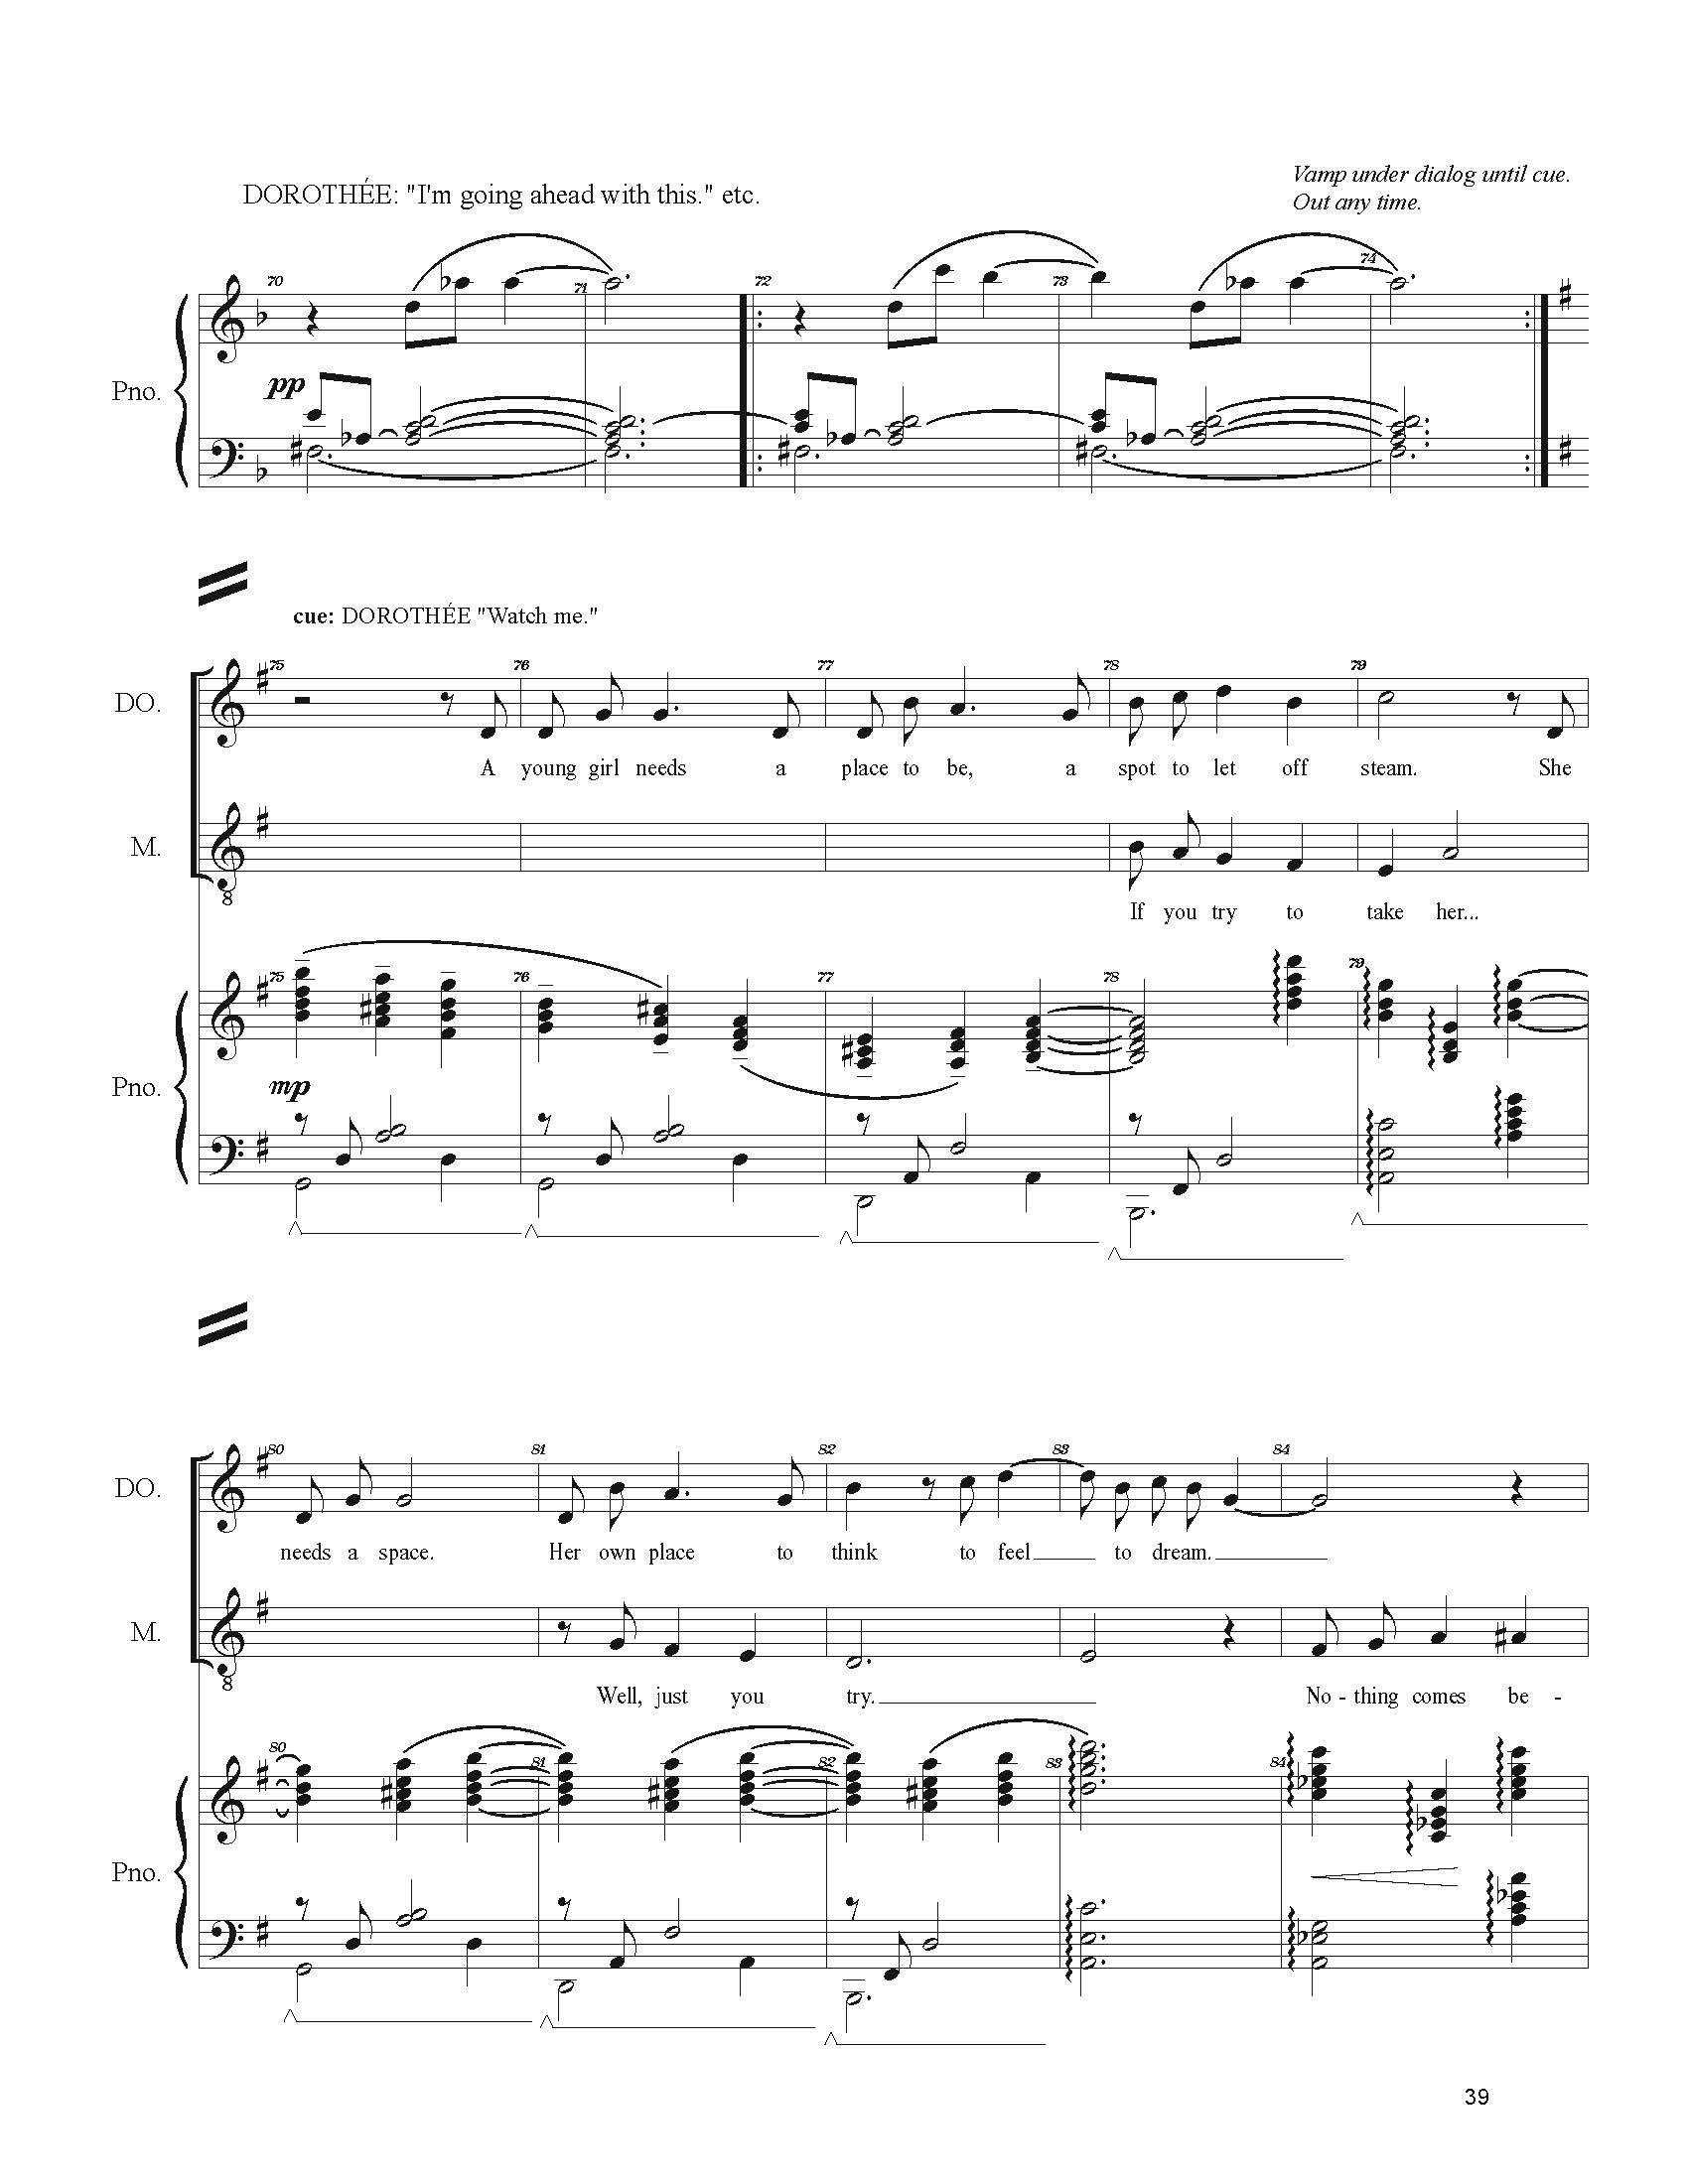 FULL PIANO VOCAL SCORE DRAFT 1 - Score_Page_039.jpg